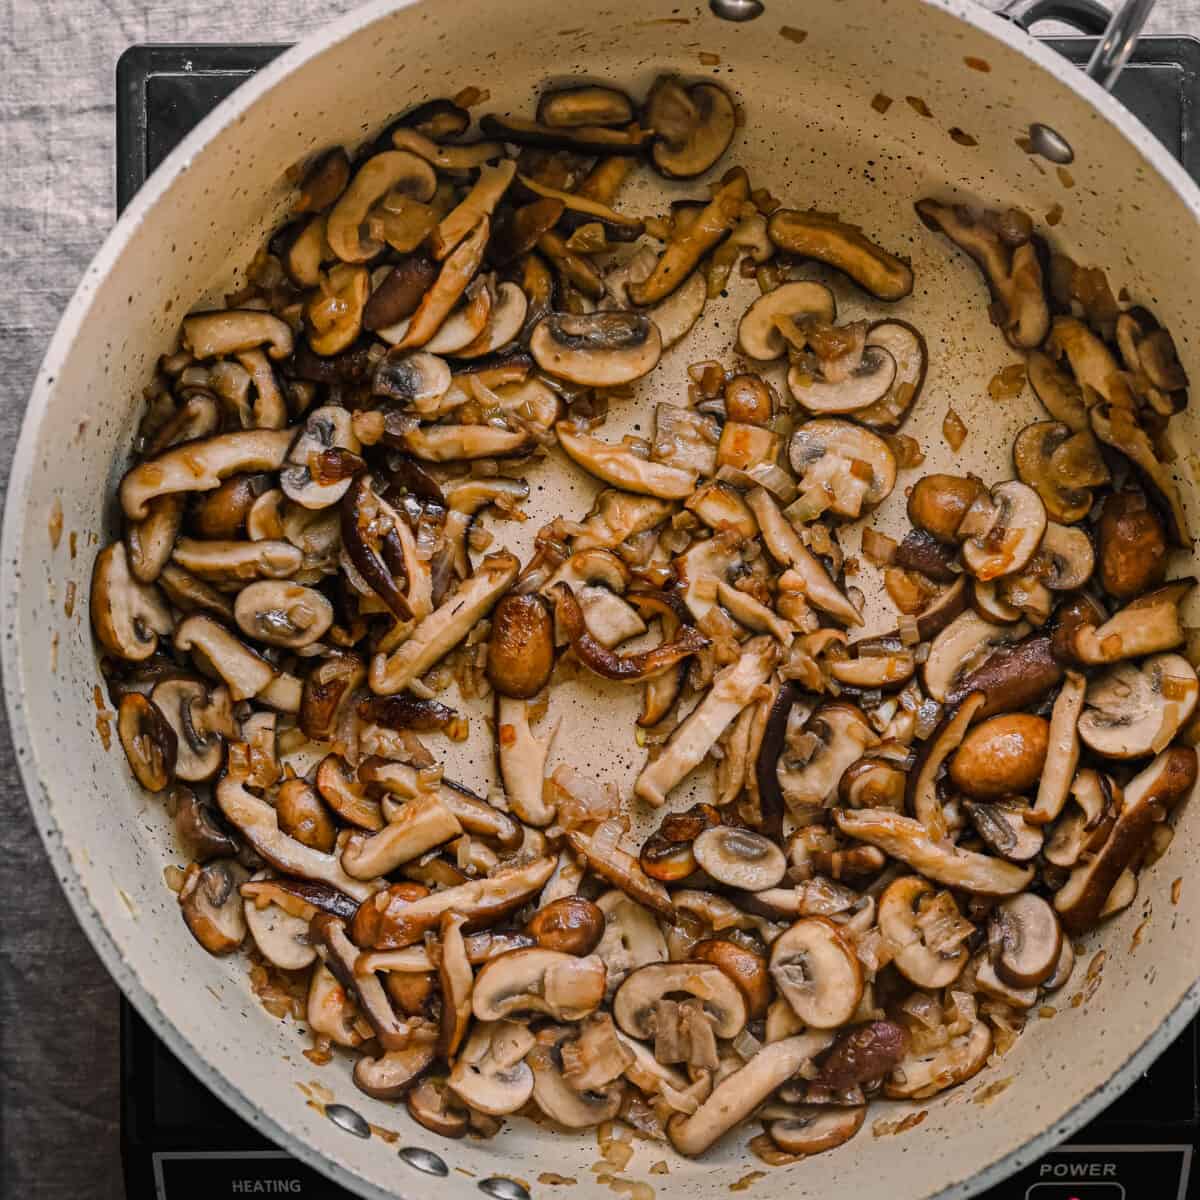 sauteing mushrooms until golden brown in a skillet